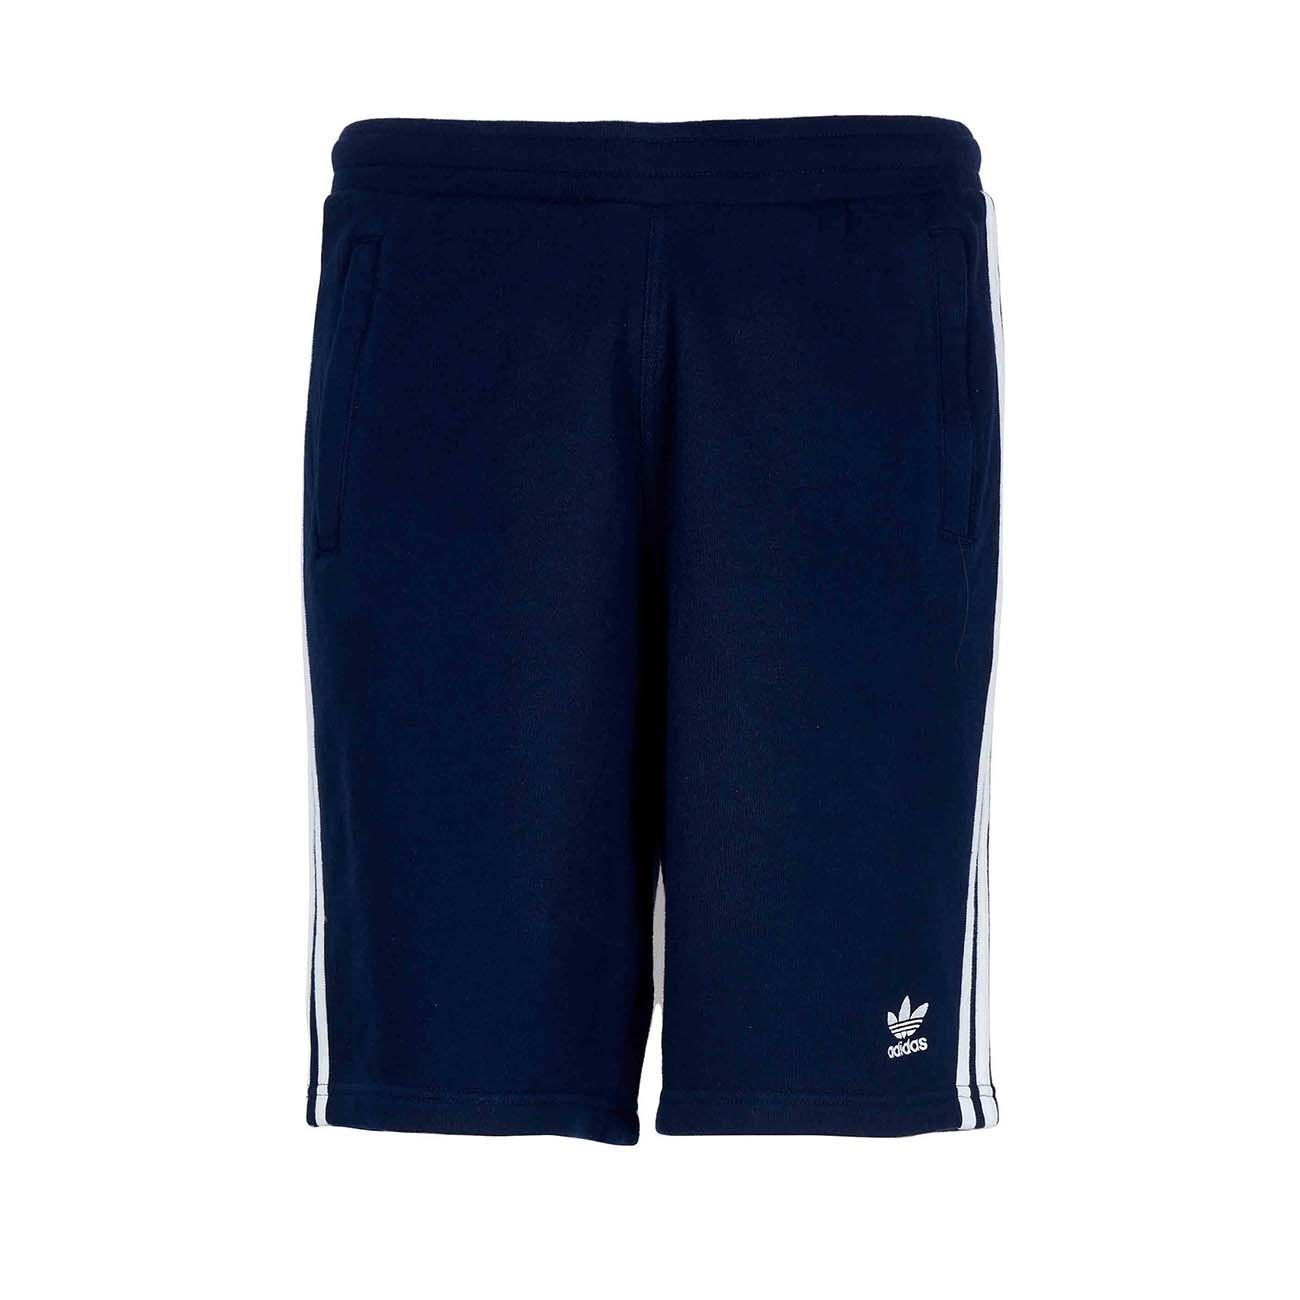 Captain brie Like smog ADIDAS 3-STRIPES BERMUDA SHORTS Man Blue navy white | Mascheroni Sportswear